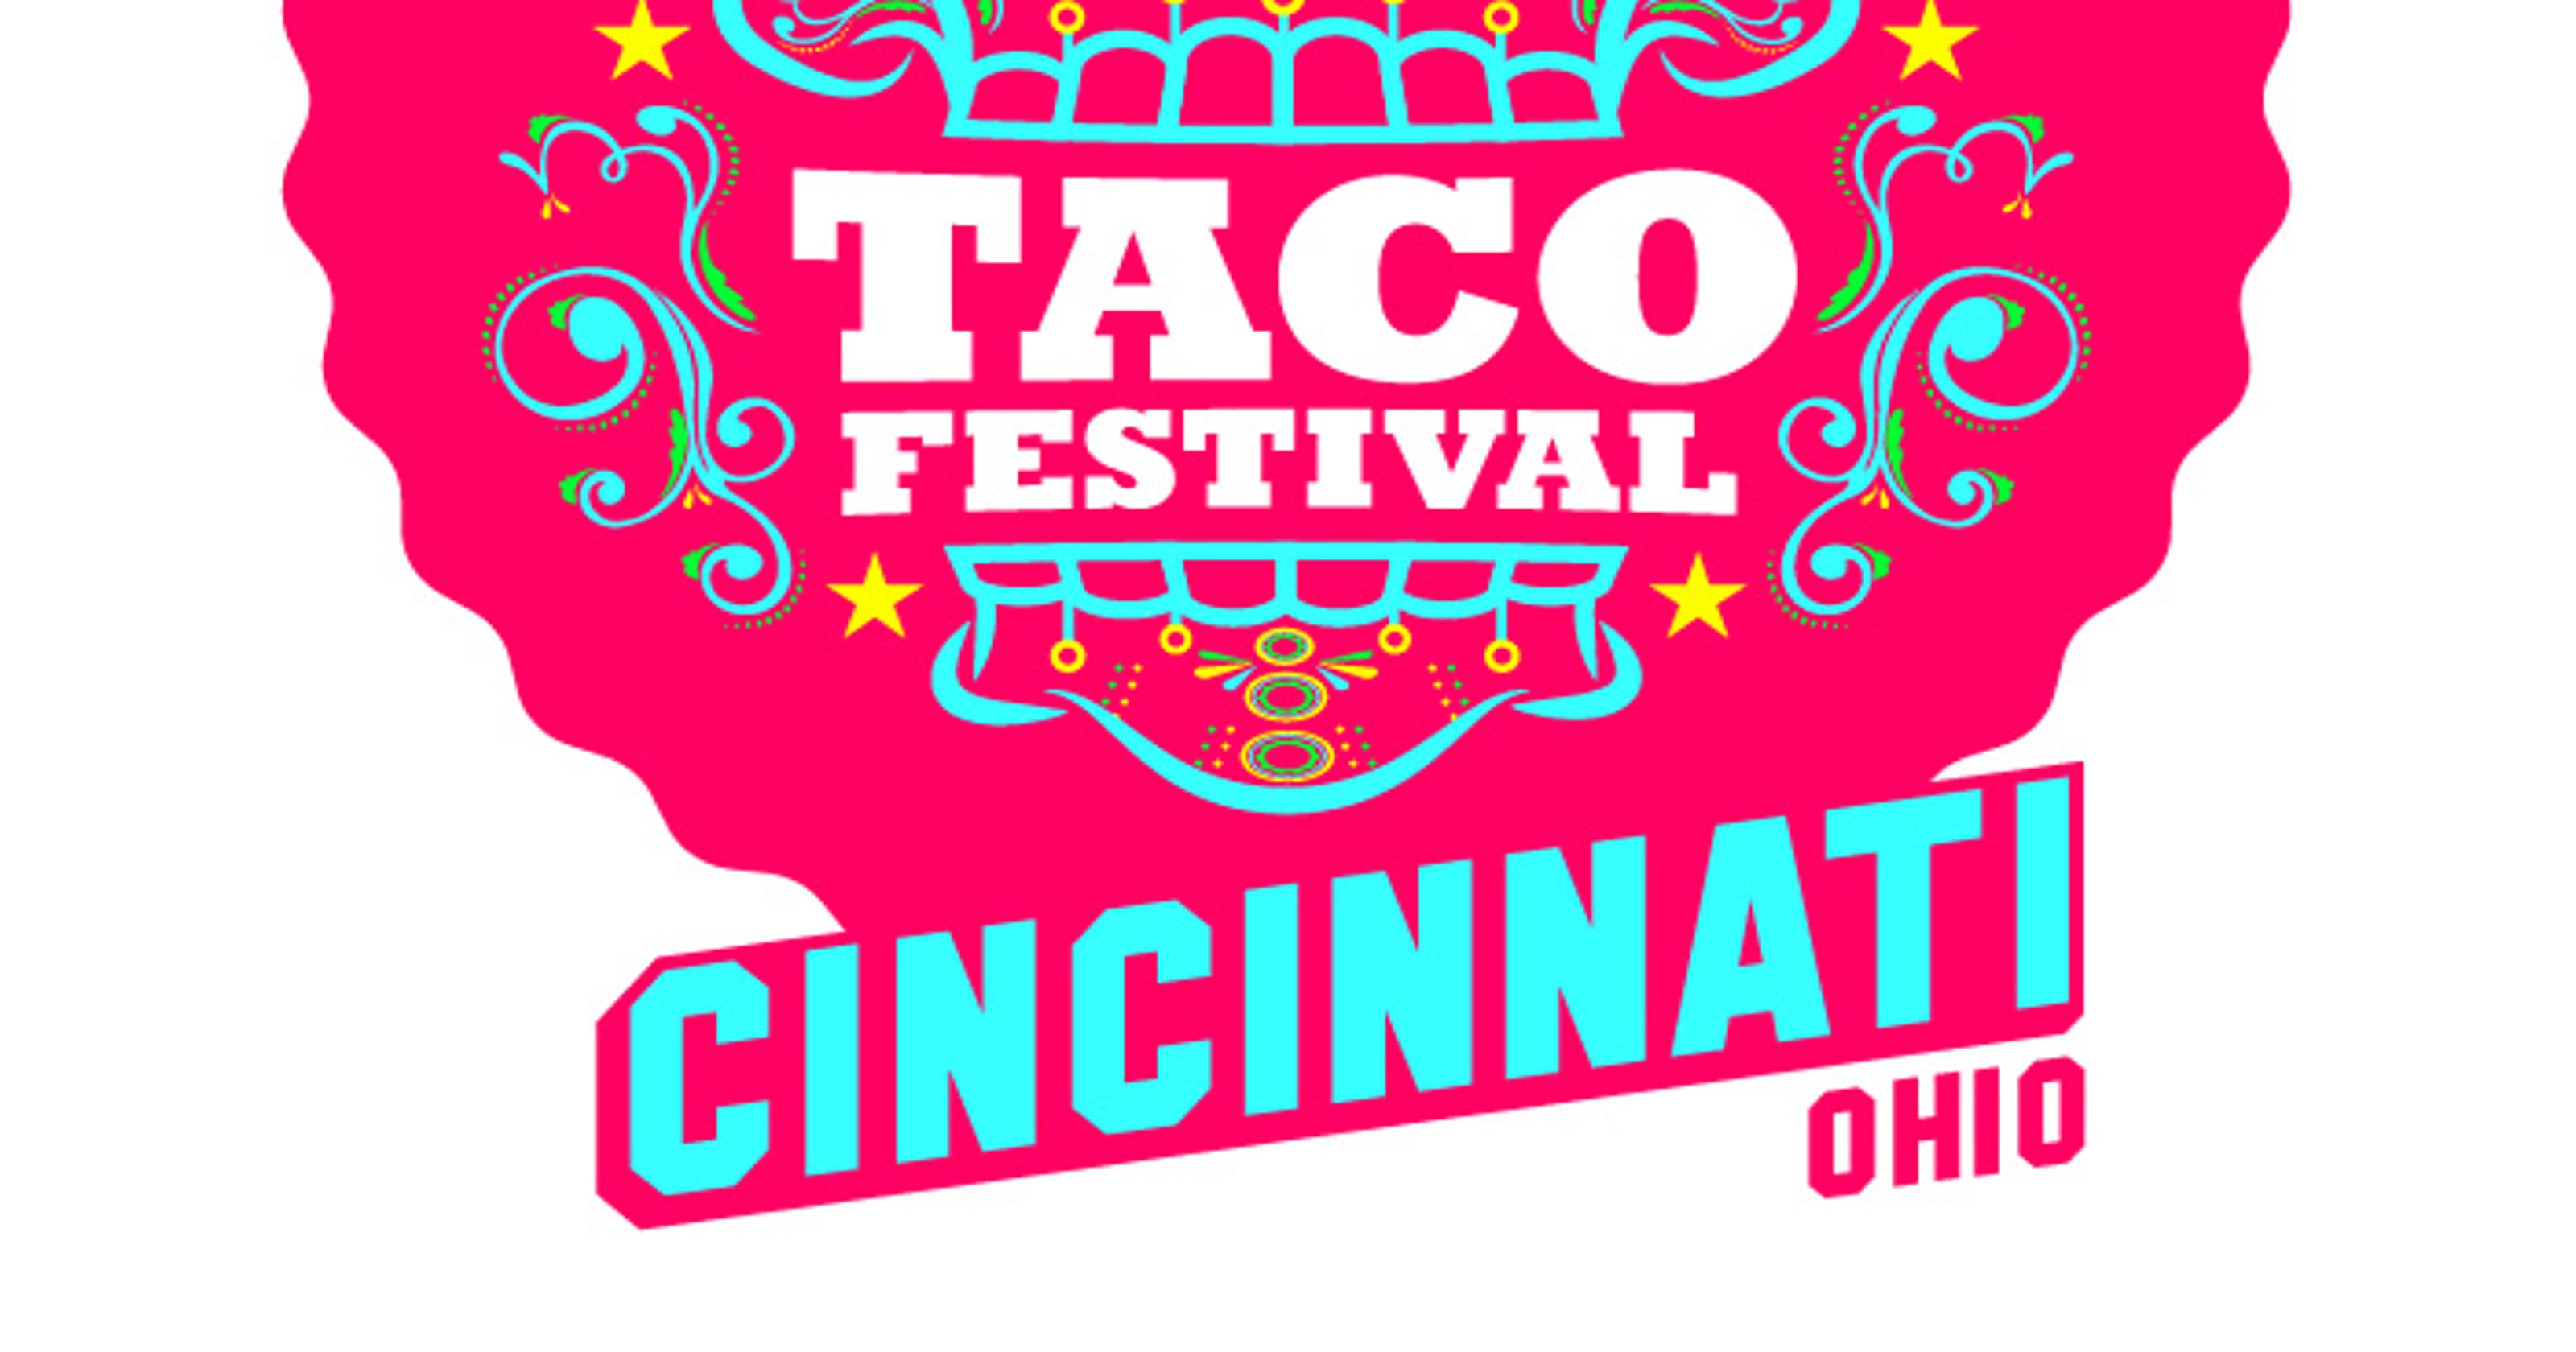 Reggae rock band to perform at Taco Festival Cincinnati